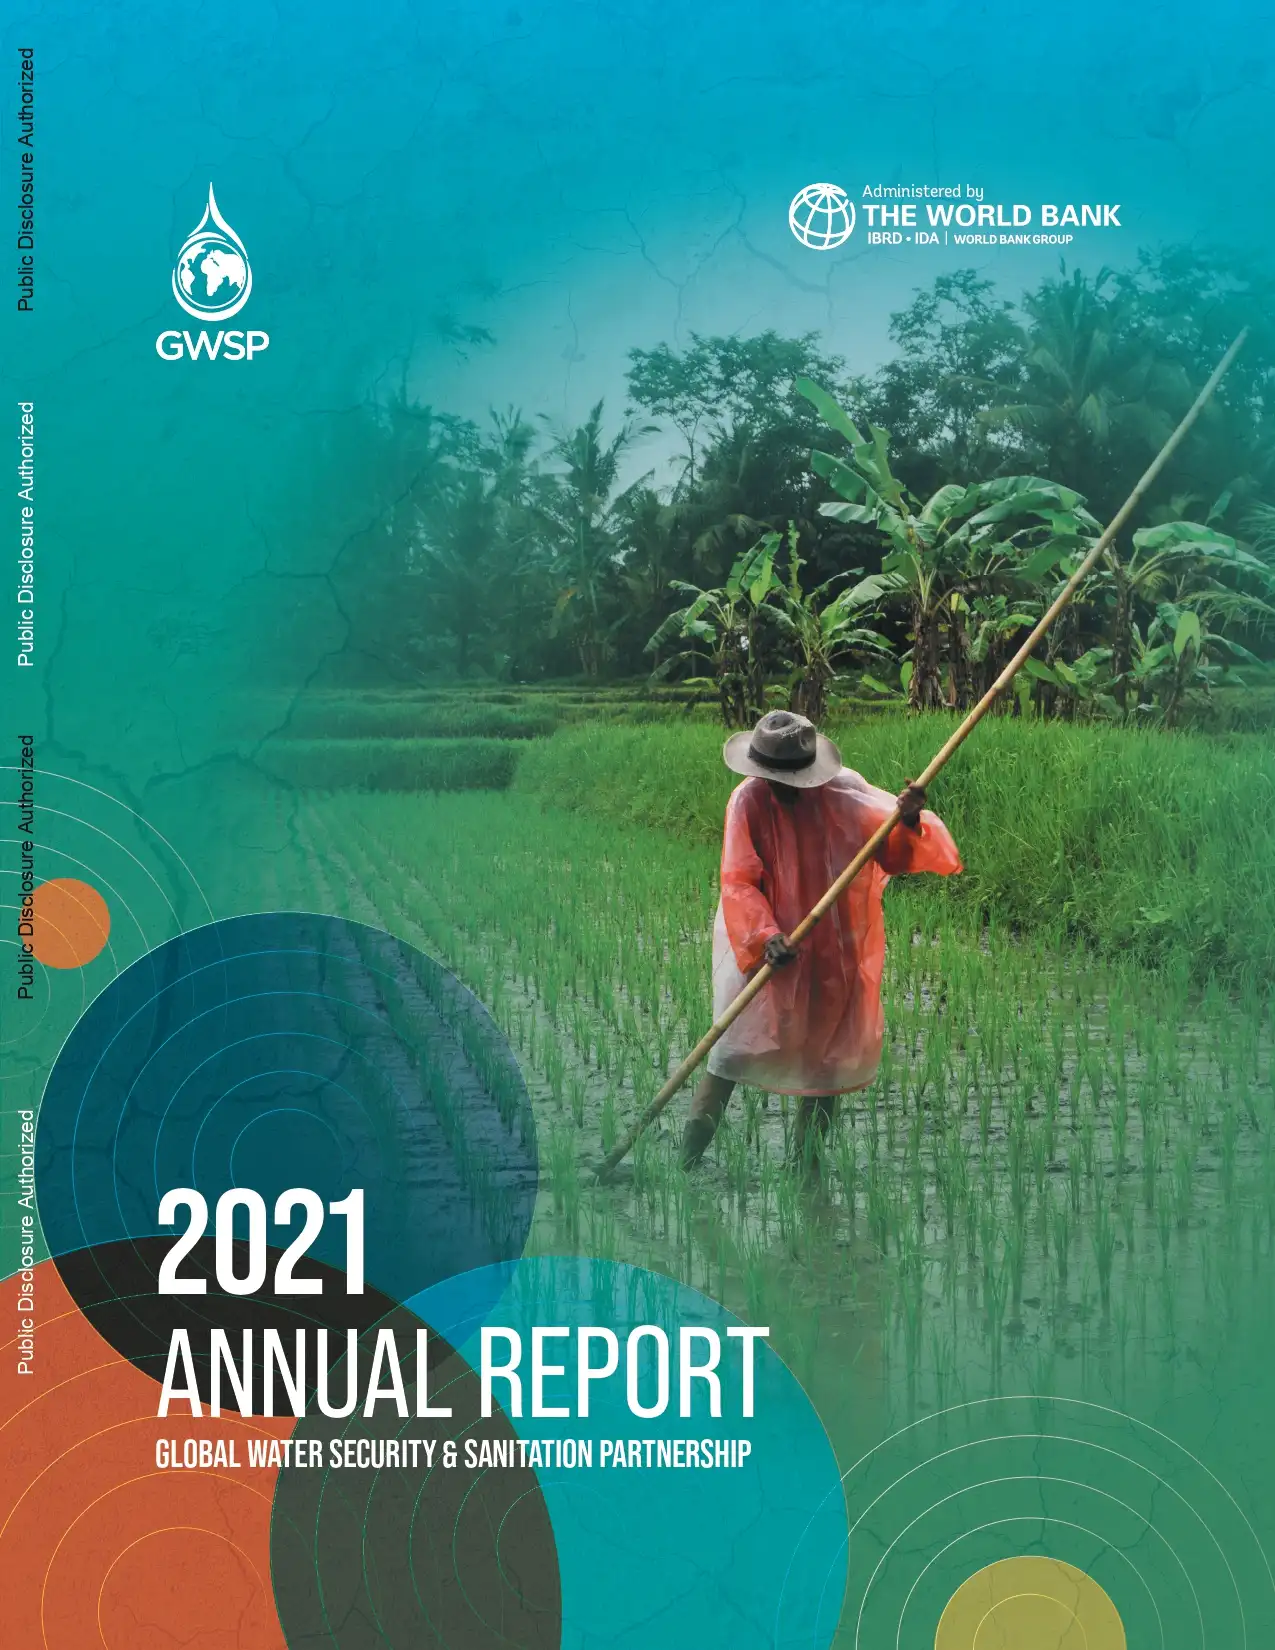 2021 Annual Report Global Water Security & Sanitation Partnership